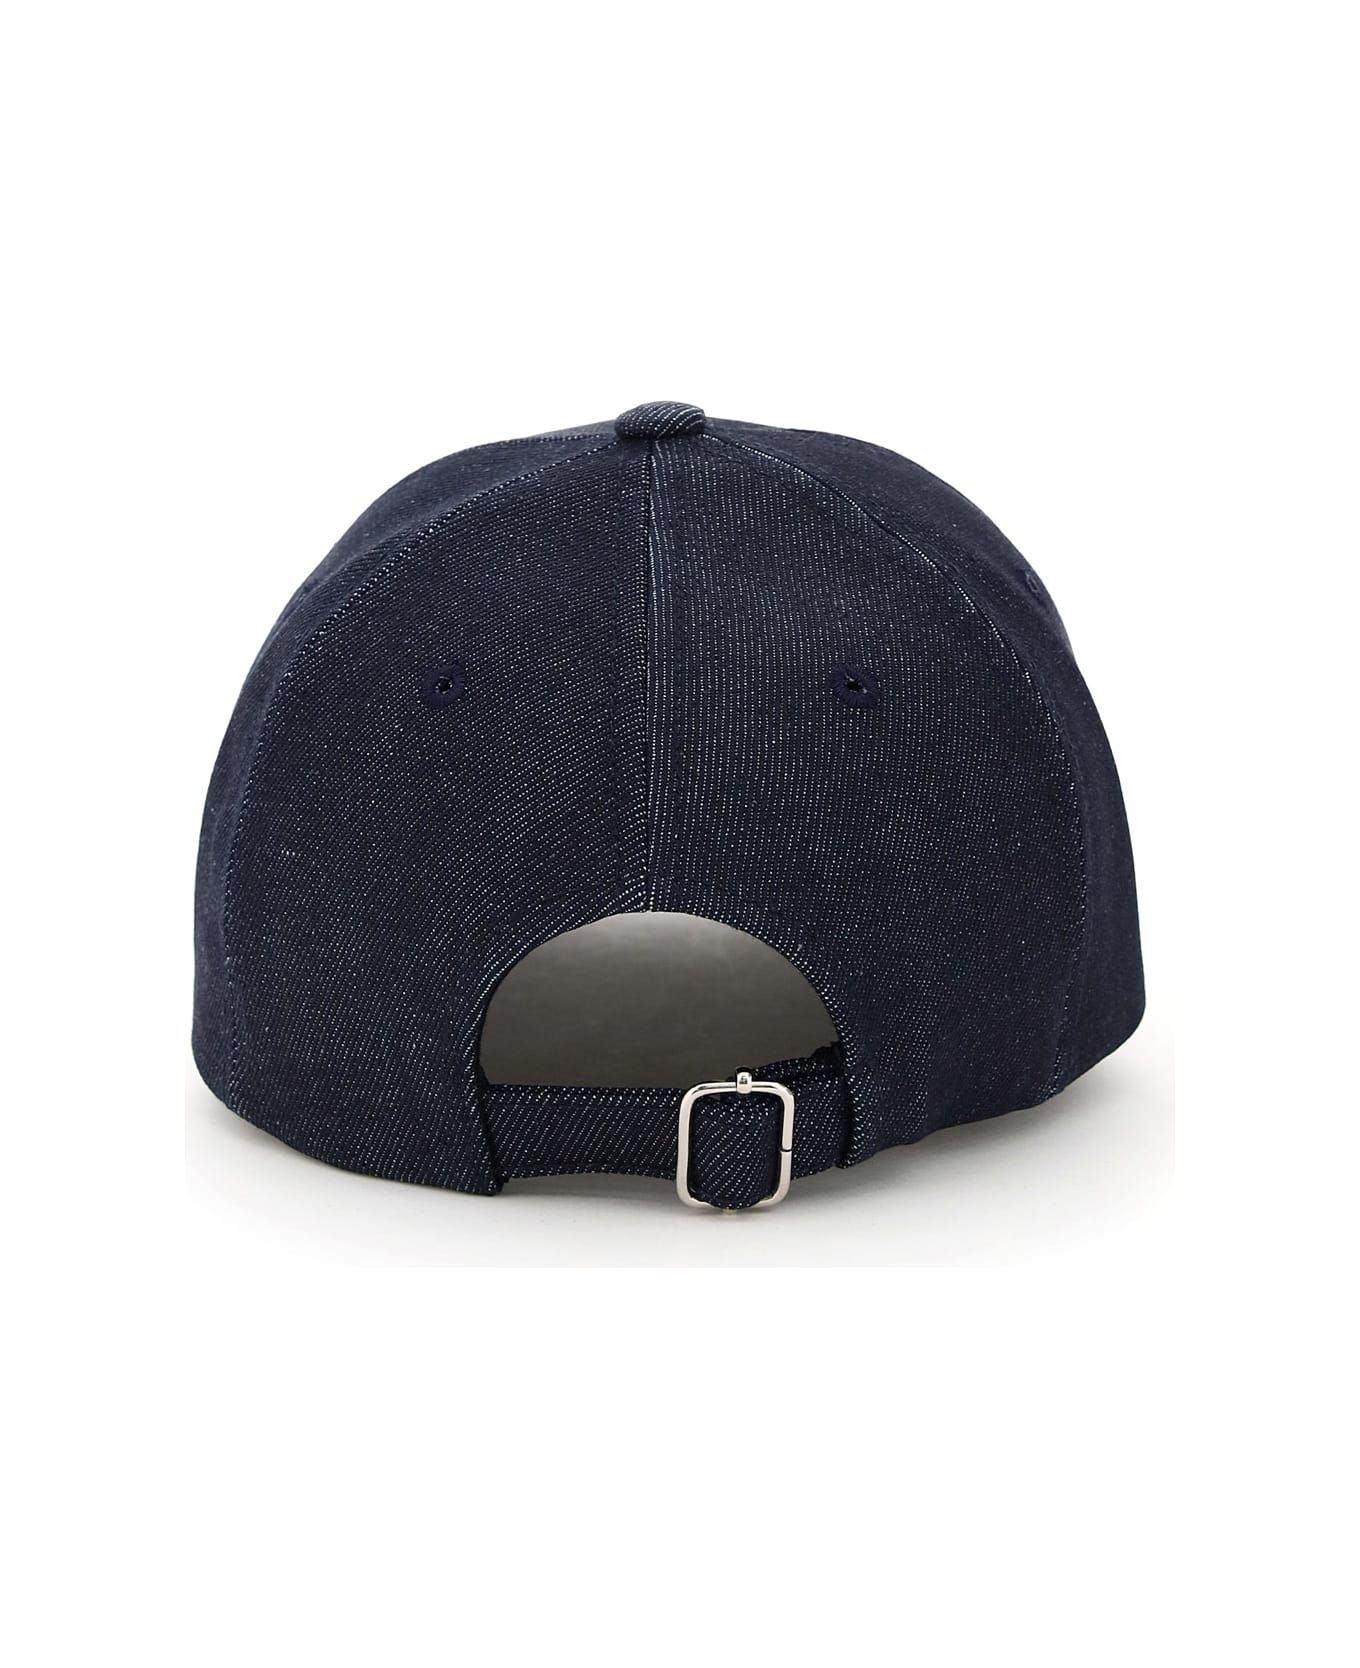 A.P.C. Charlie Denim Baseball Cap - Blue 帽子